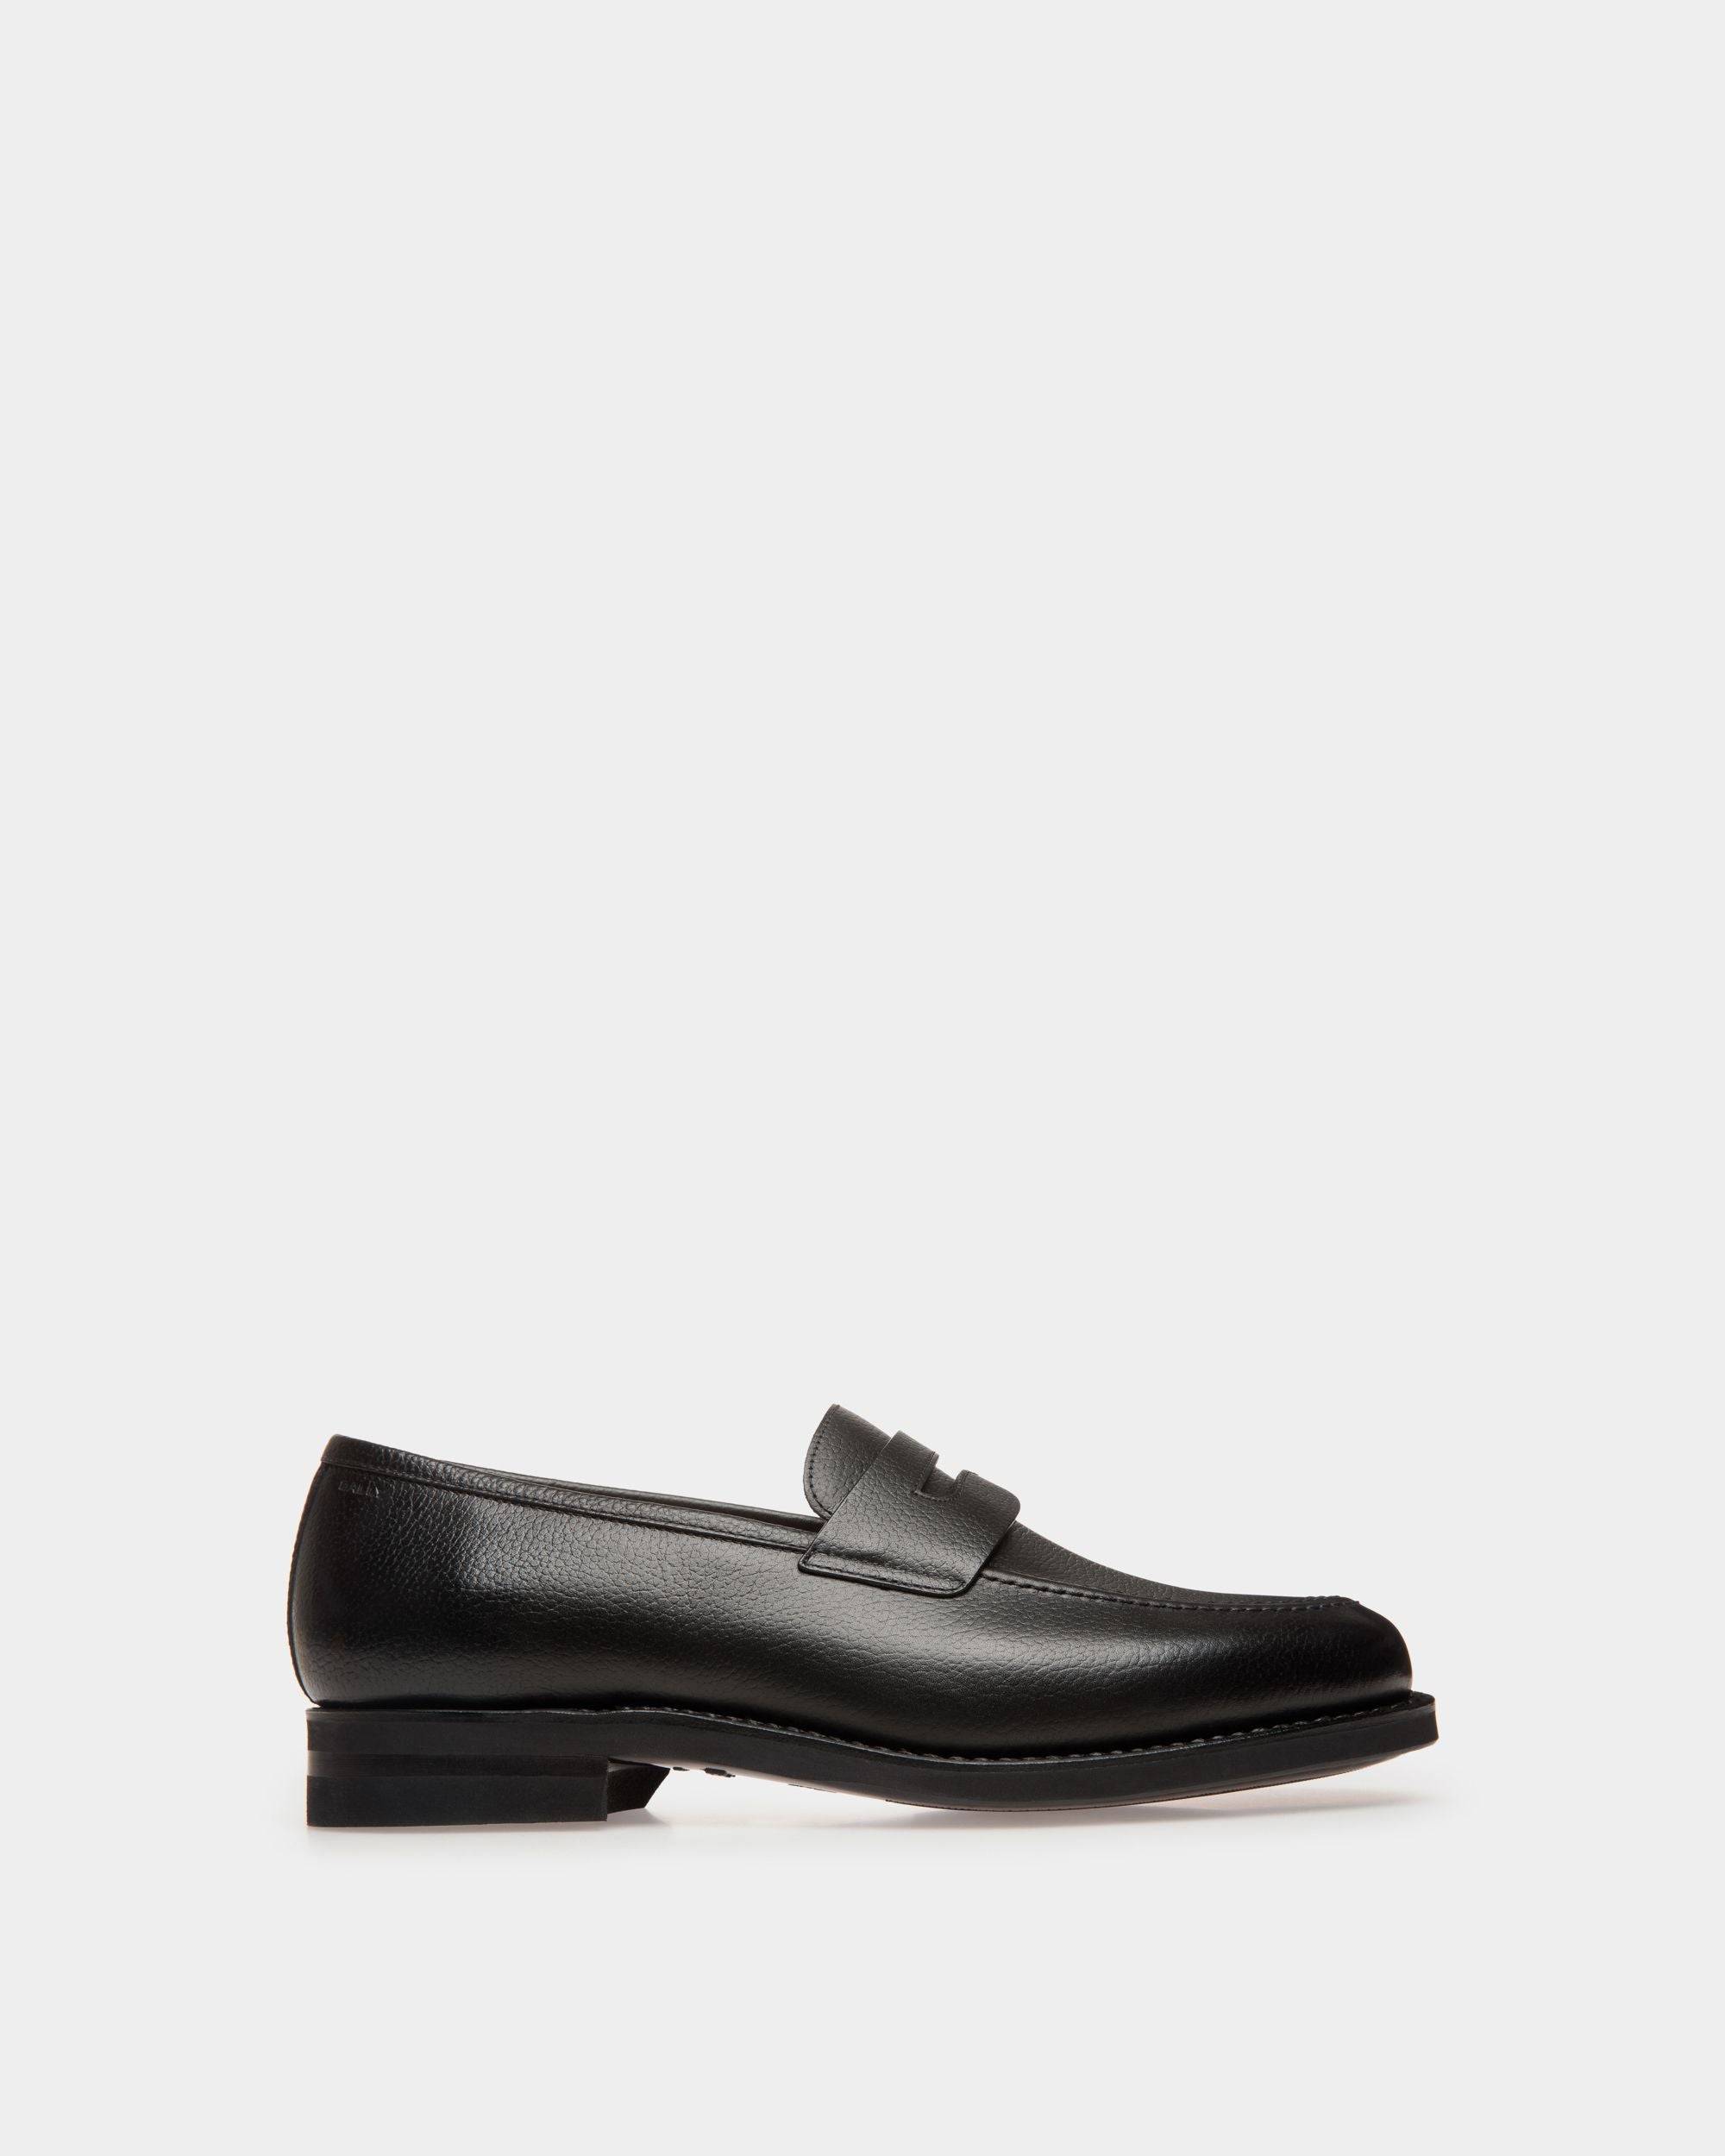 Schoenen | Men's Loafer in Black Embossed Leather | Bally